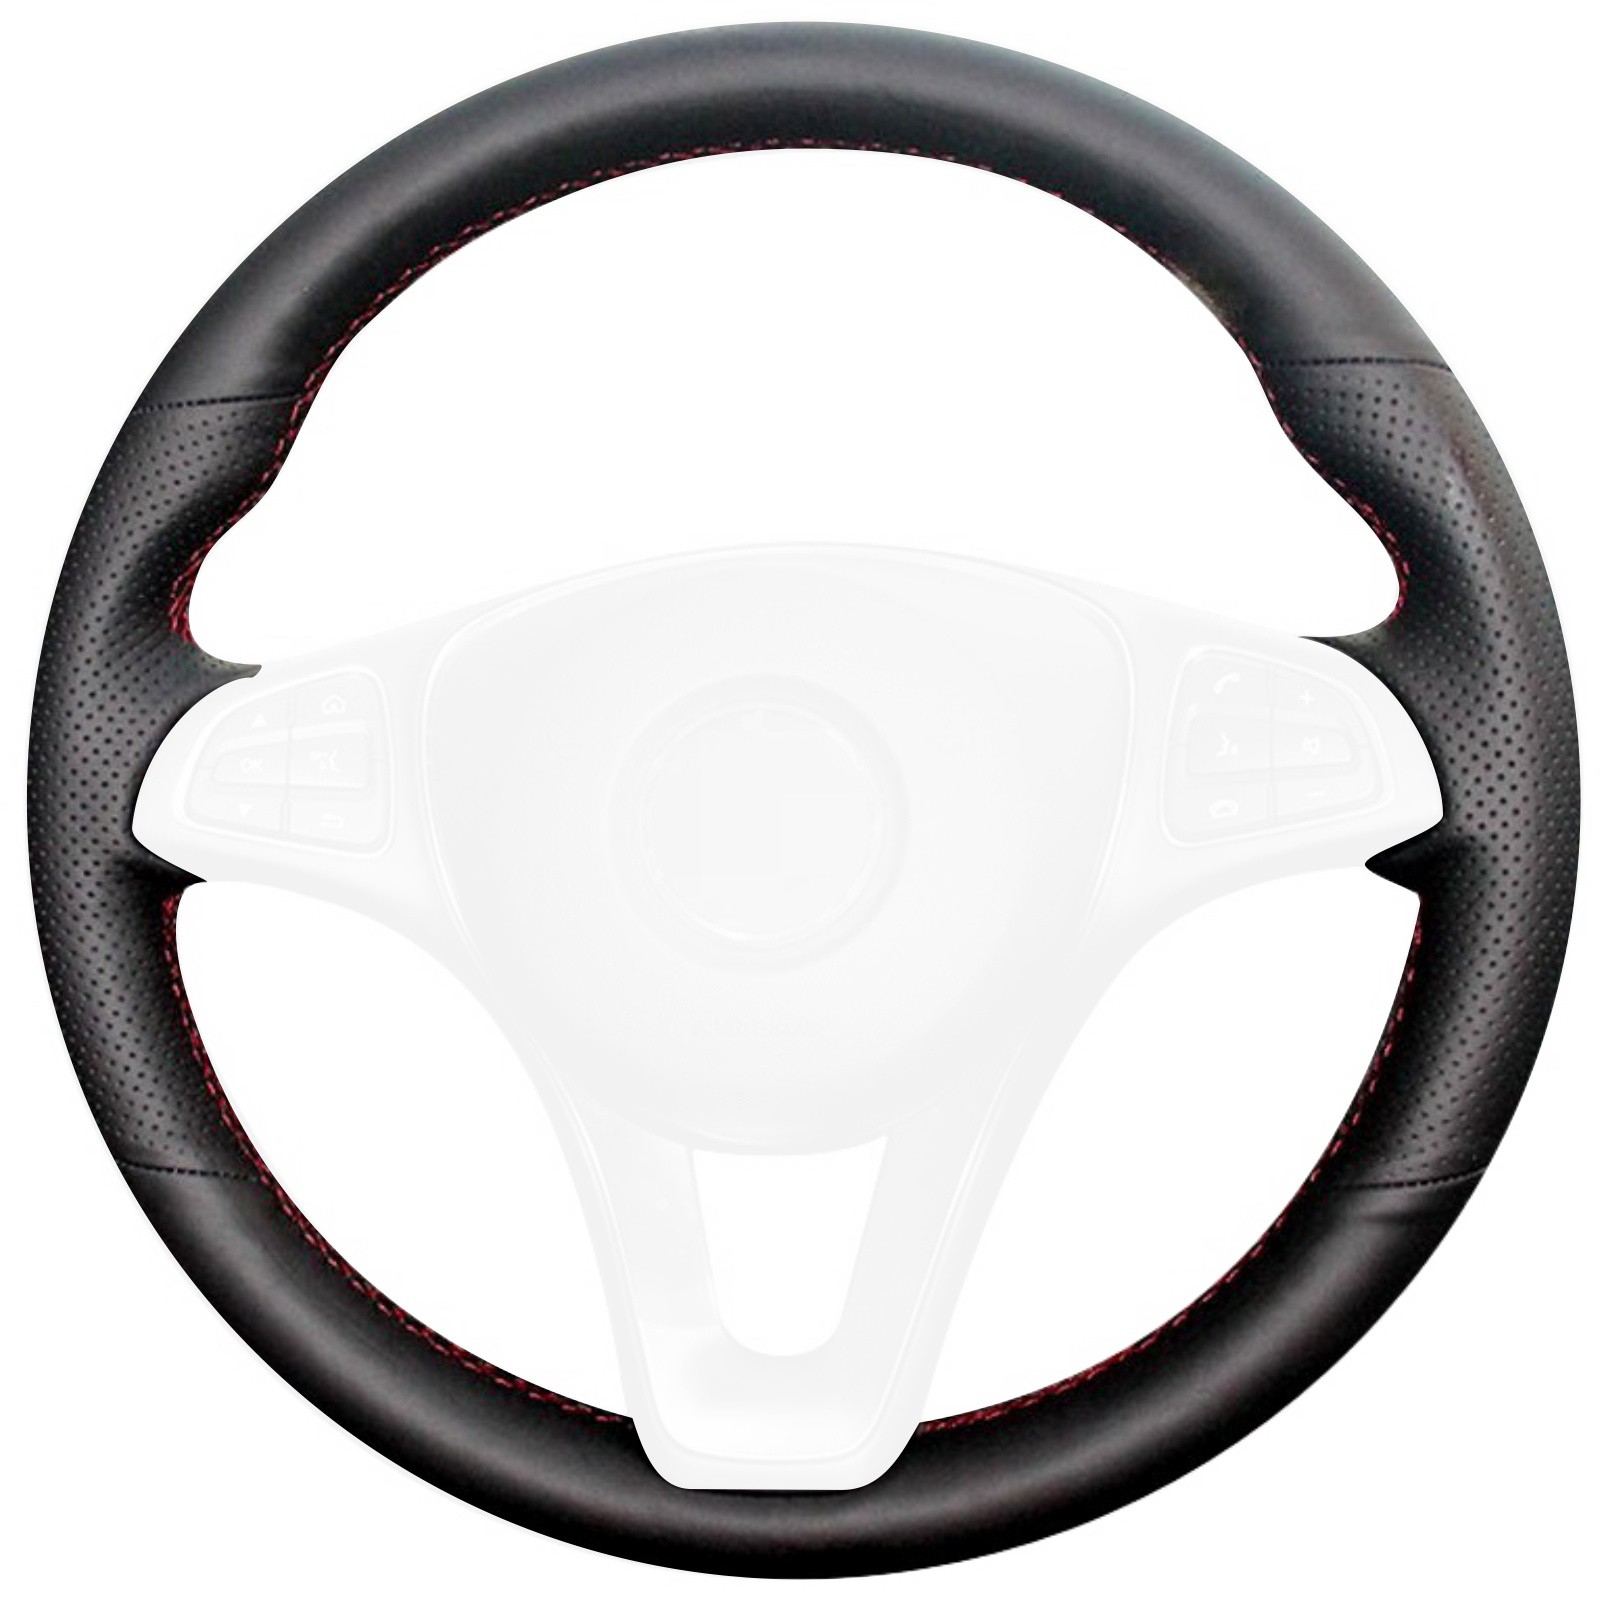 2015-22 Mercedes GLC steering wheel cover (2015-18)